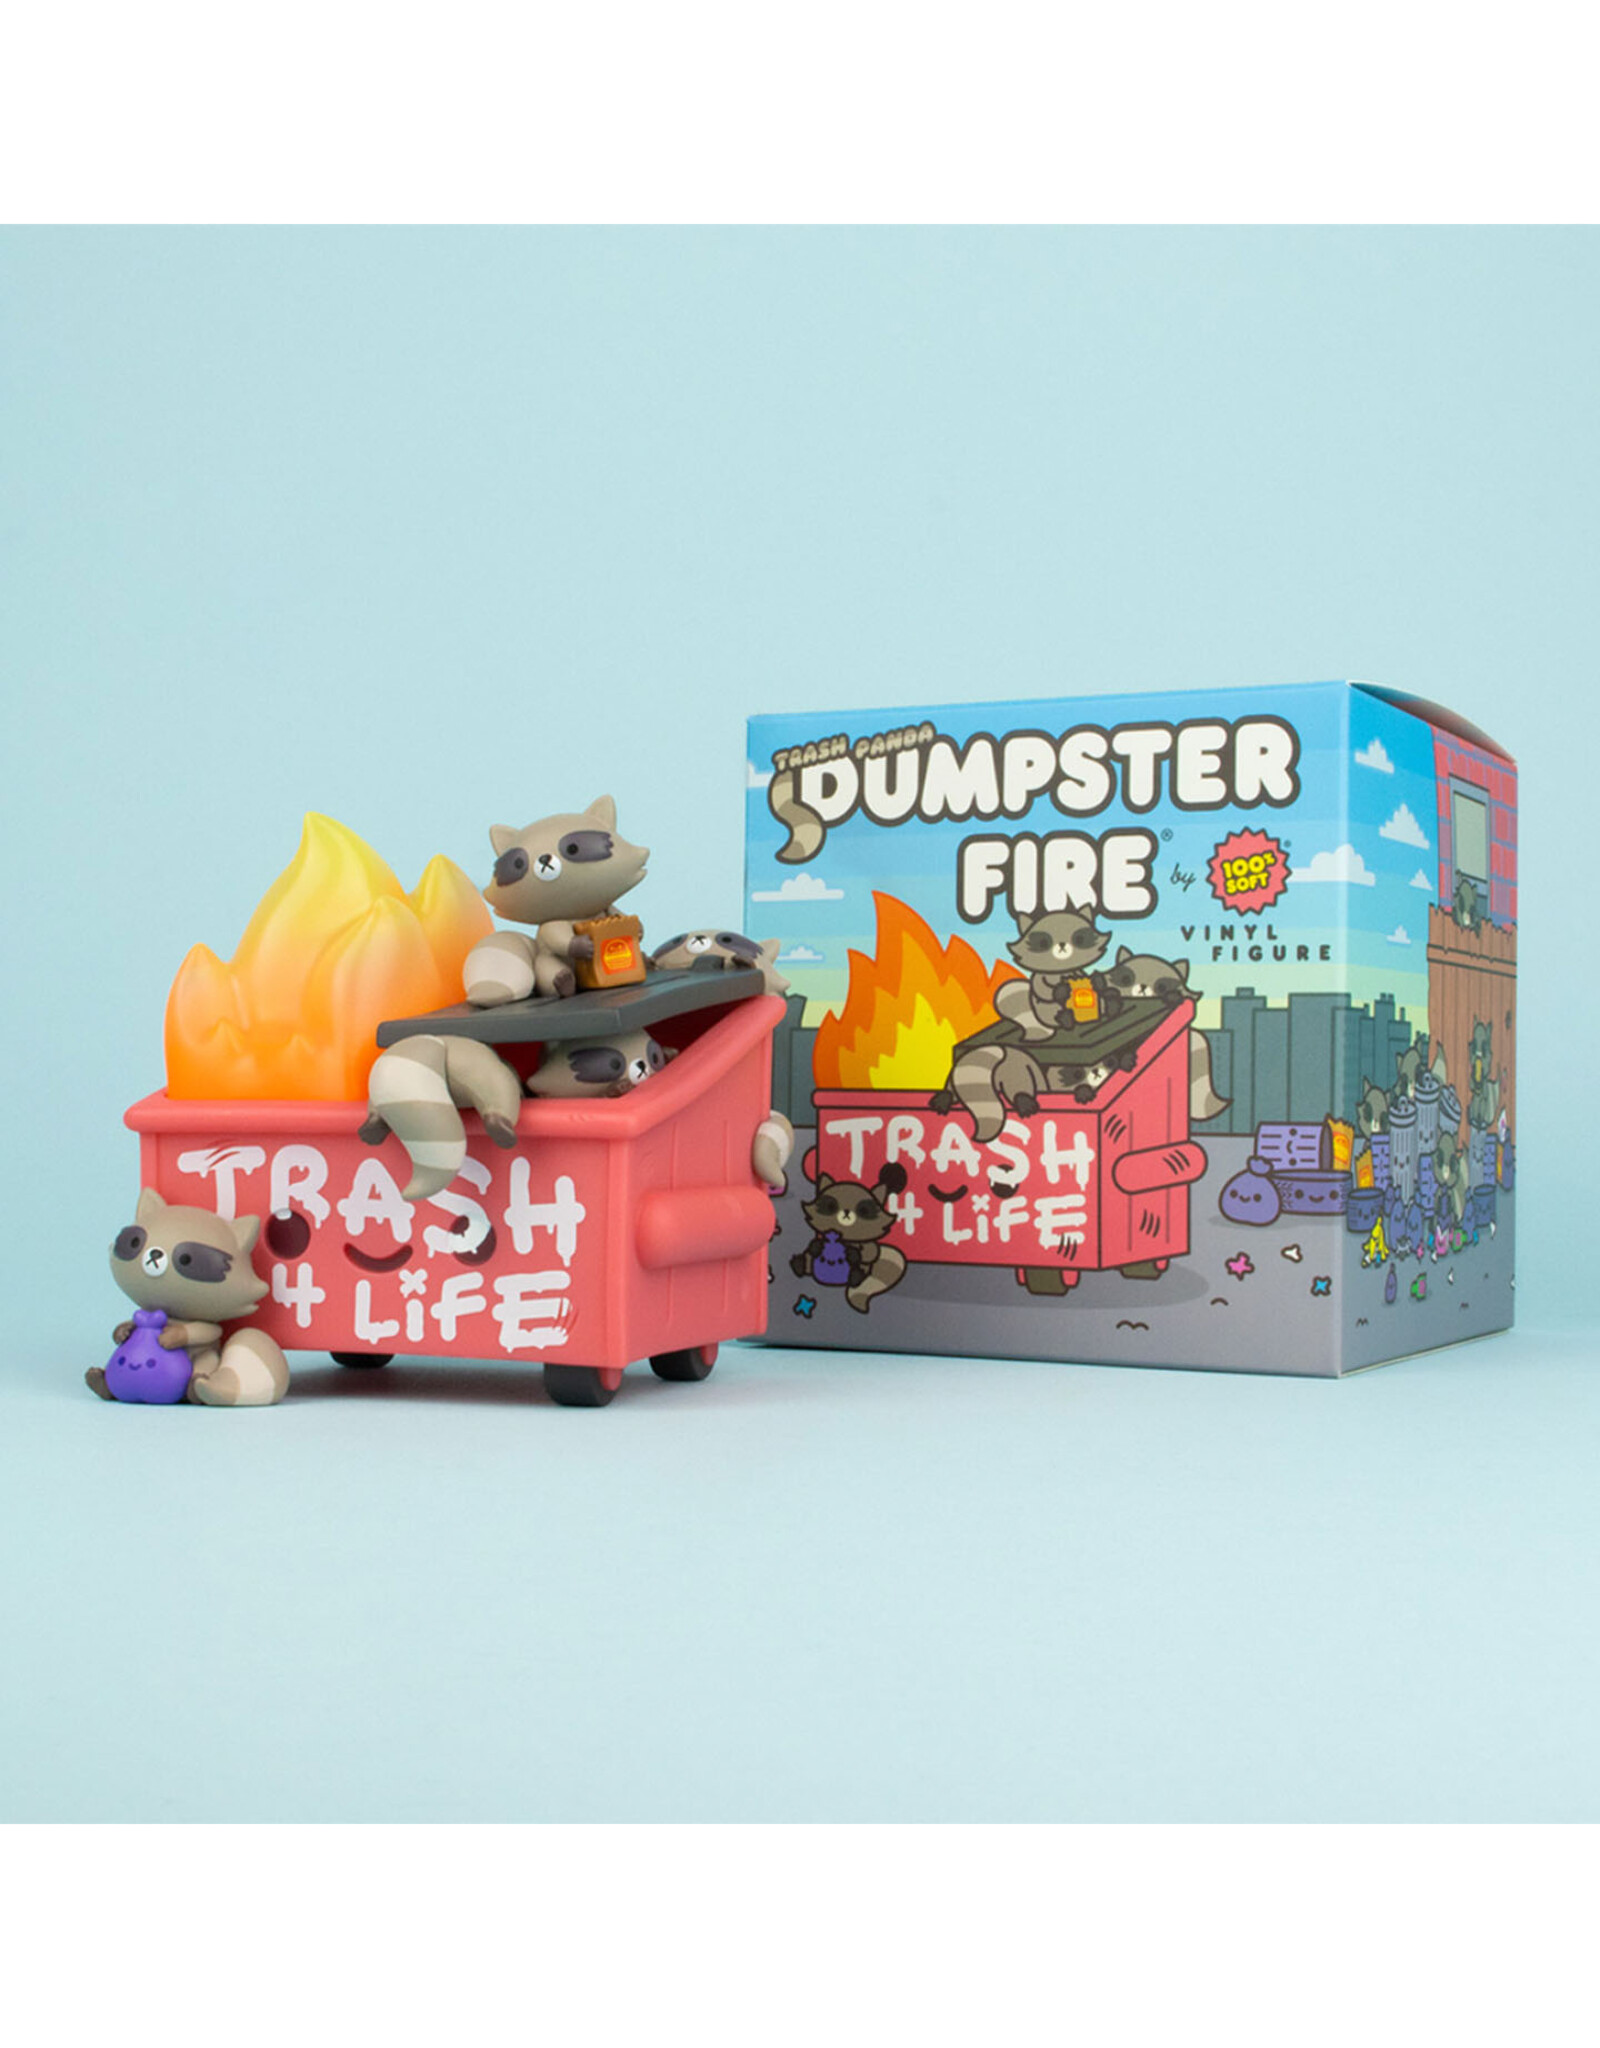 Trash Panda Dumpster Fire Vinyl Figure